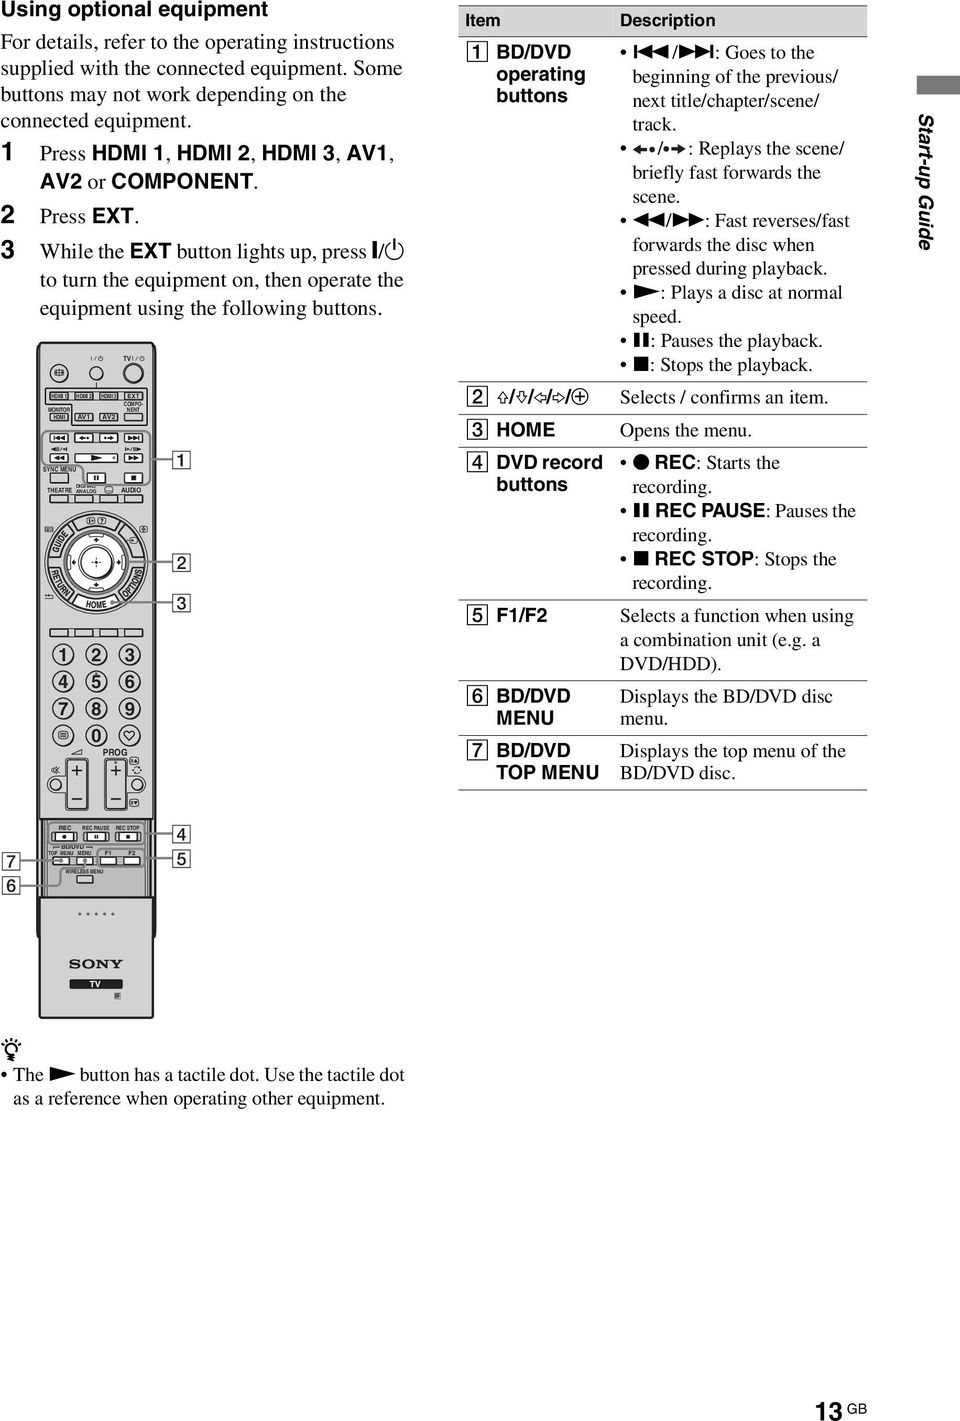 HDMI 1 MONITOR HDMI SYNC MENU THEATRE 1 4 7 HDMI 2 AV1 DIGITAL/ ANALOG 2 5 8 0 HDMI 3 AV2 TV PROG EXT COMPO- NENT AUDIO 3 6 9 1 2 3 Item 1 BD/DVD operating buttons Description.